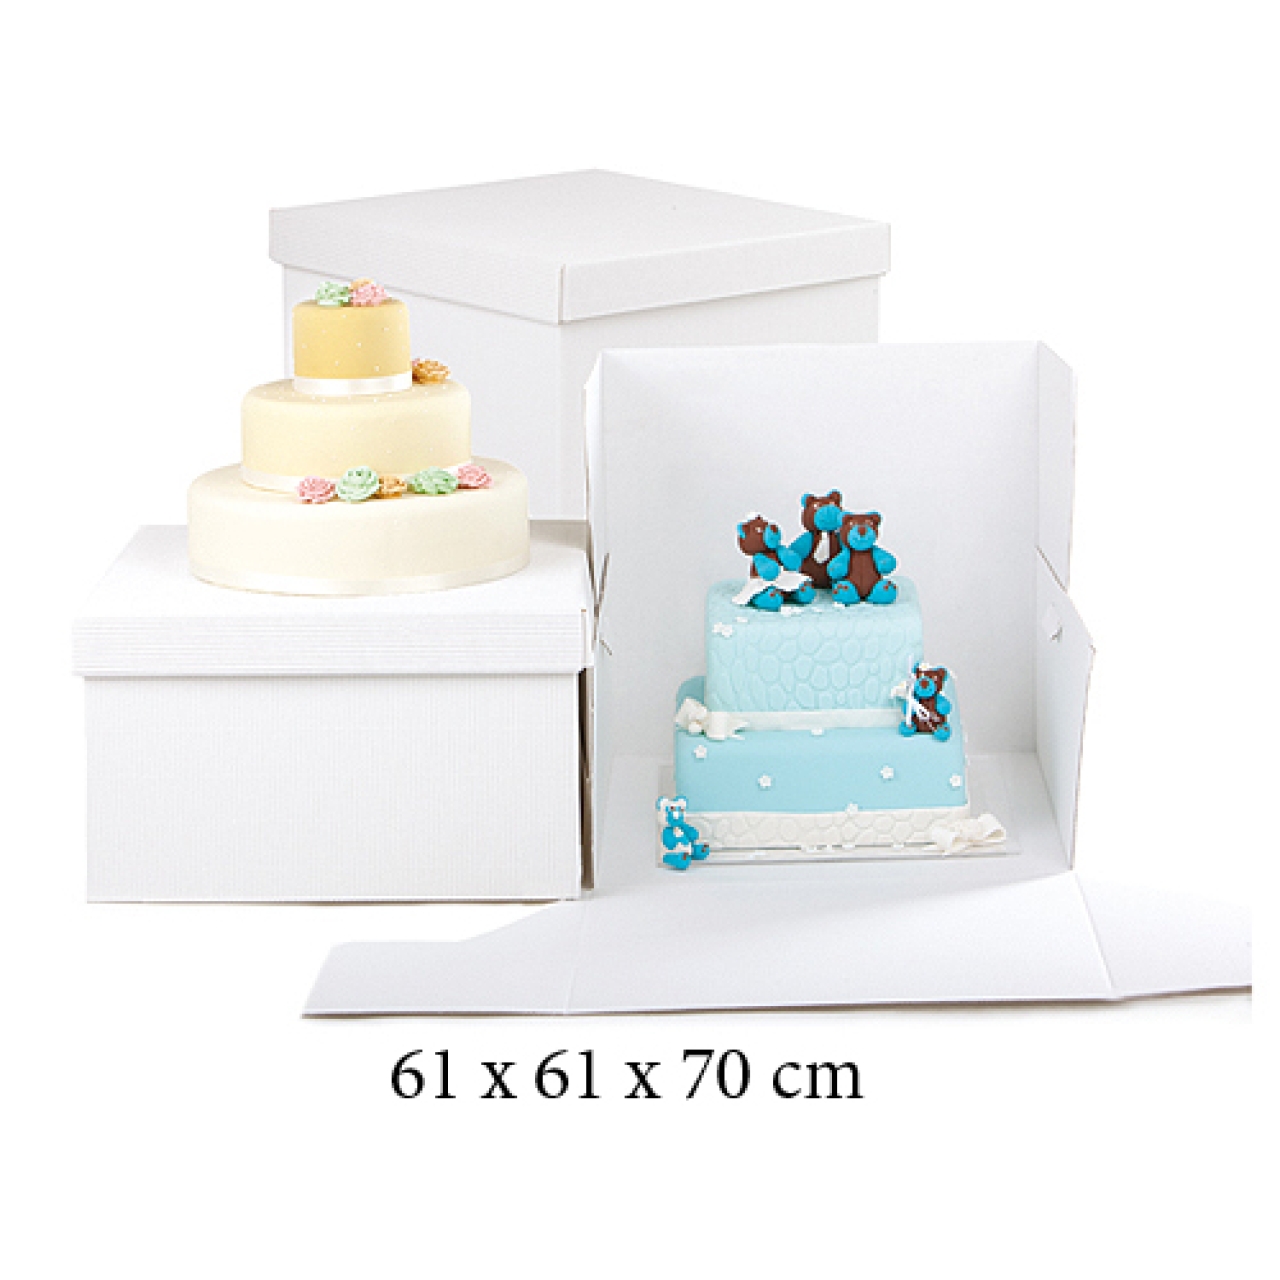 Tortenbox würfel, extra tief, XXL-Karton für Torte, XXL-Karton für Torte,  61 x 70 cm, 1 Stck. | MEINCUPCAKE Shop